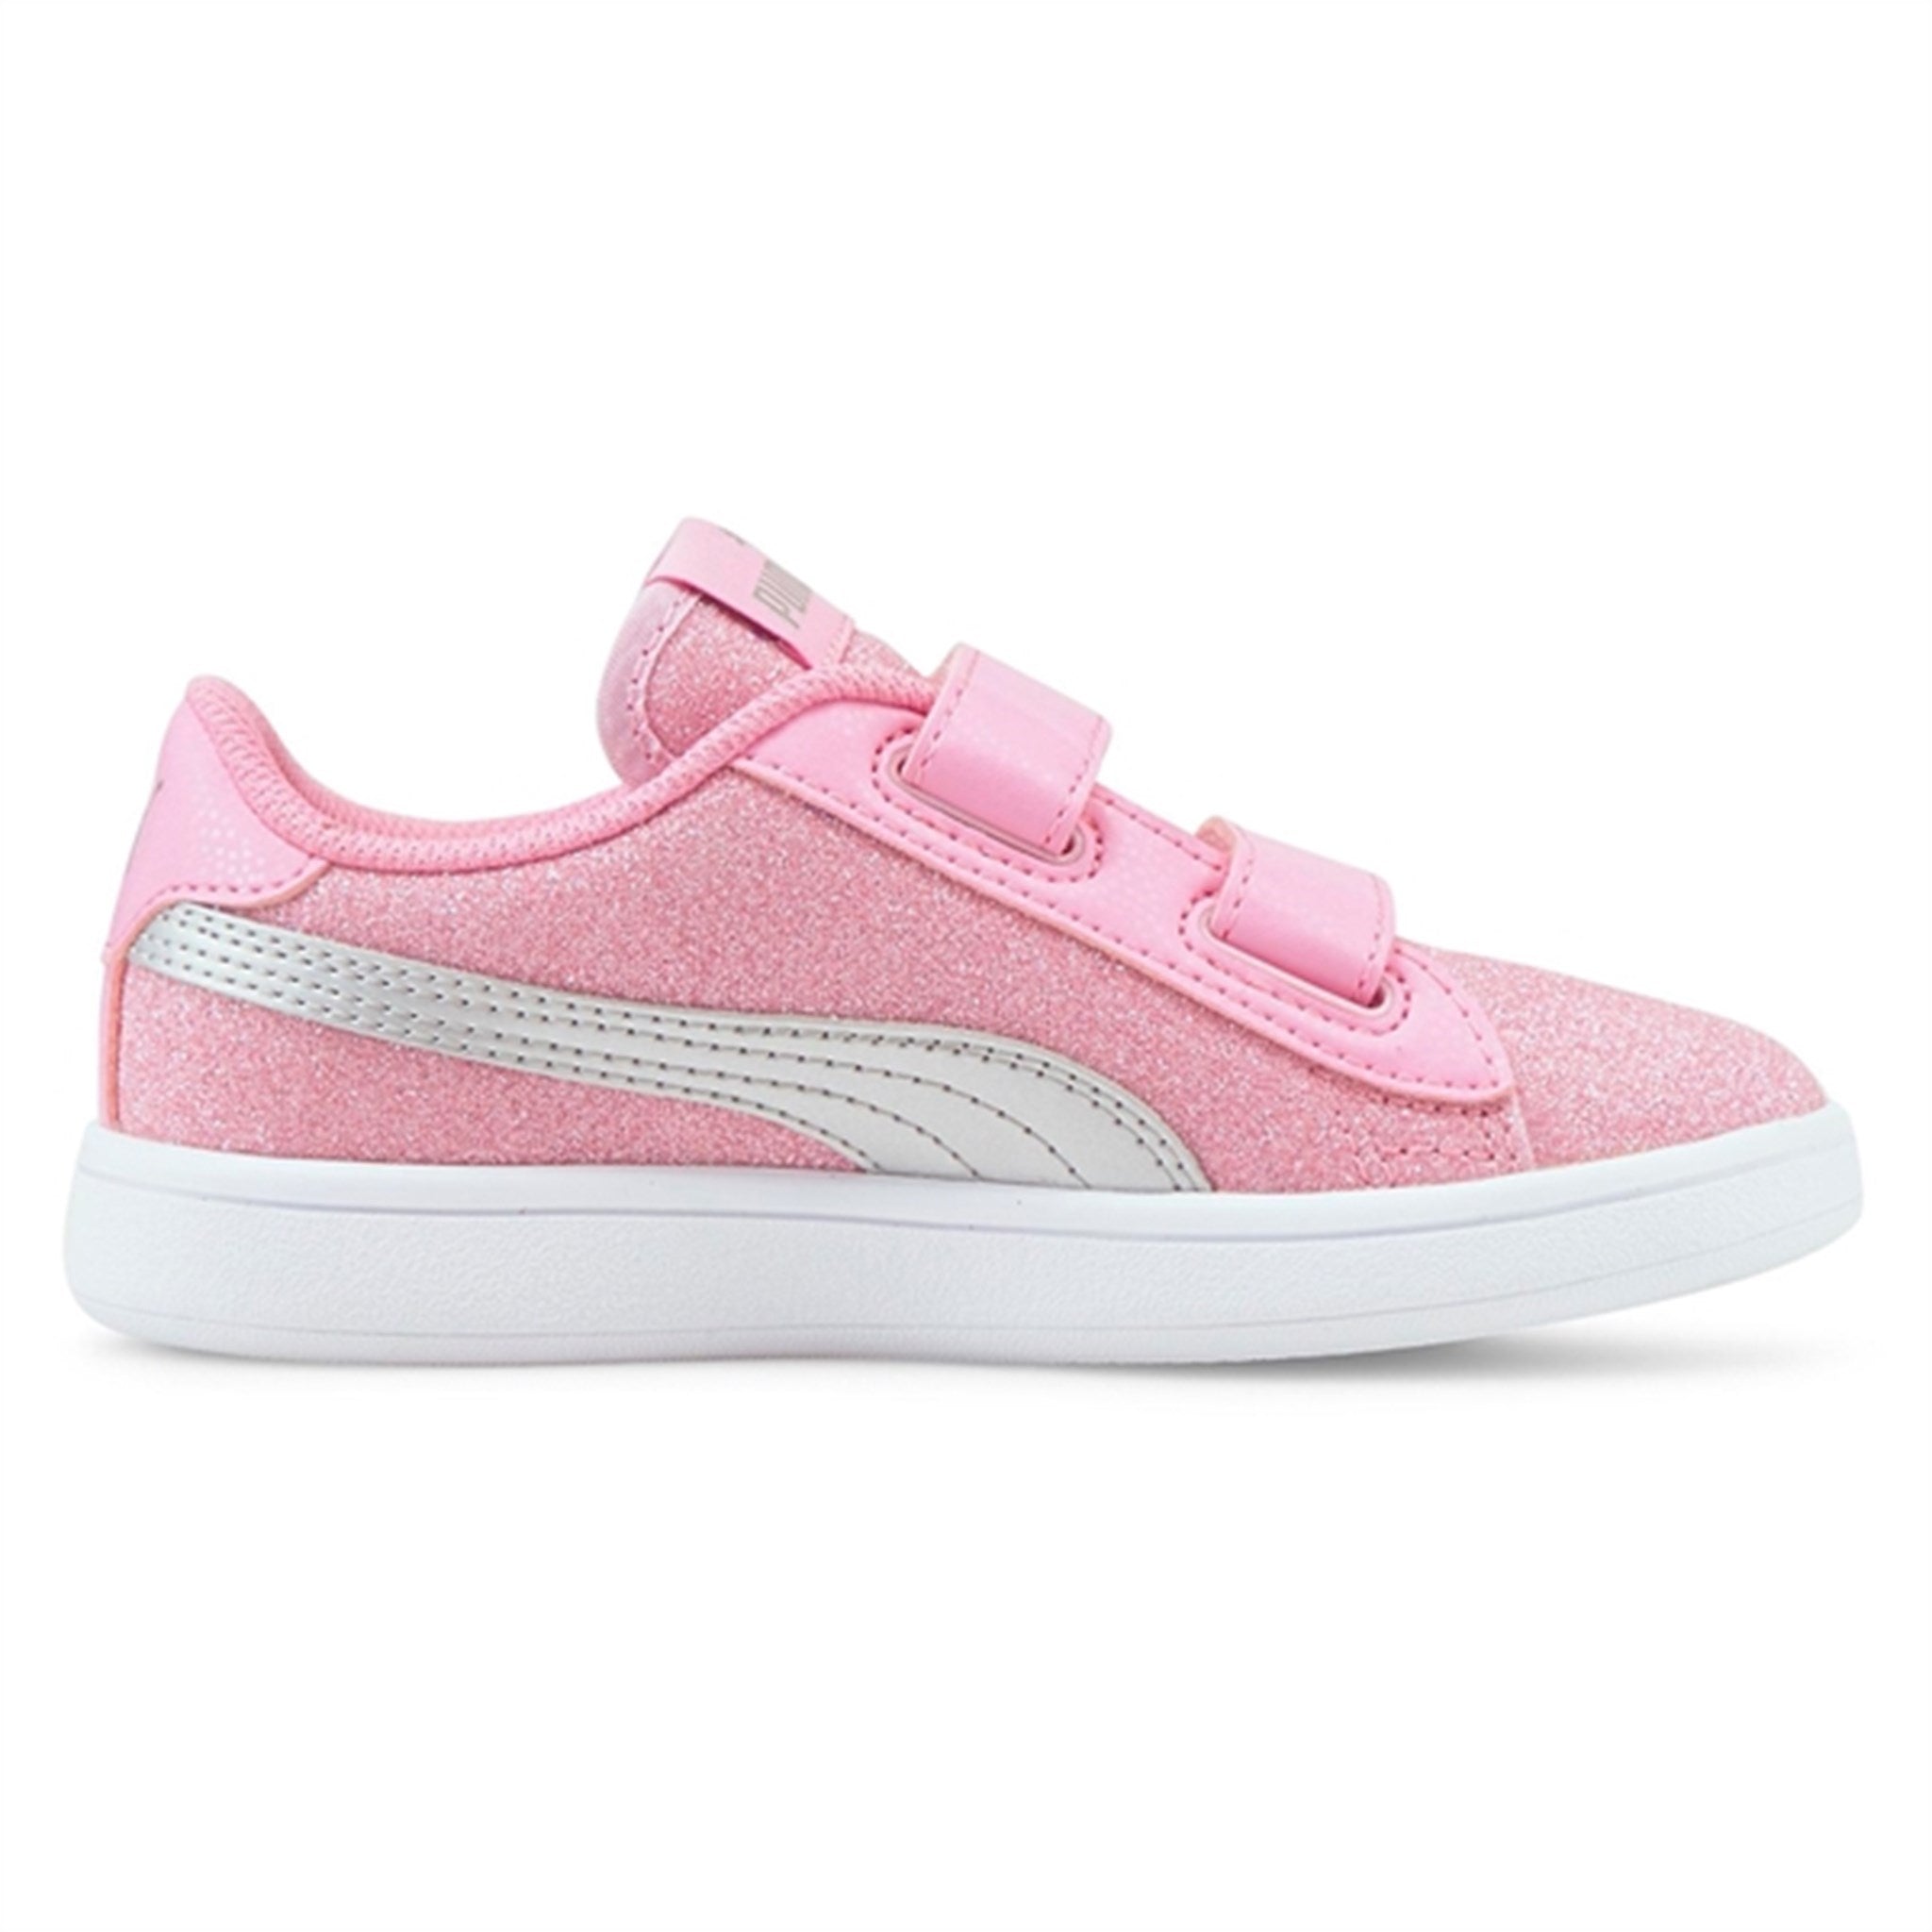 Puma Smash v2 Glitz Glam V PS Sneakers Prism Pink-Silver 2